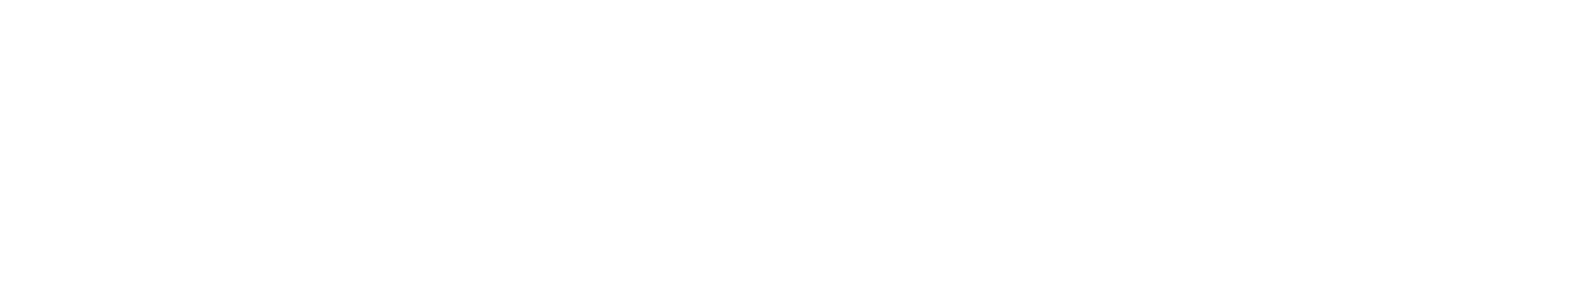 Gambling.com Group Logo groß für dunkle Hintergründe (transparentes PNG)